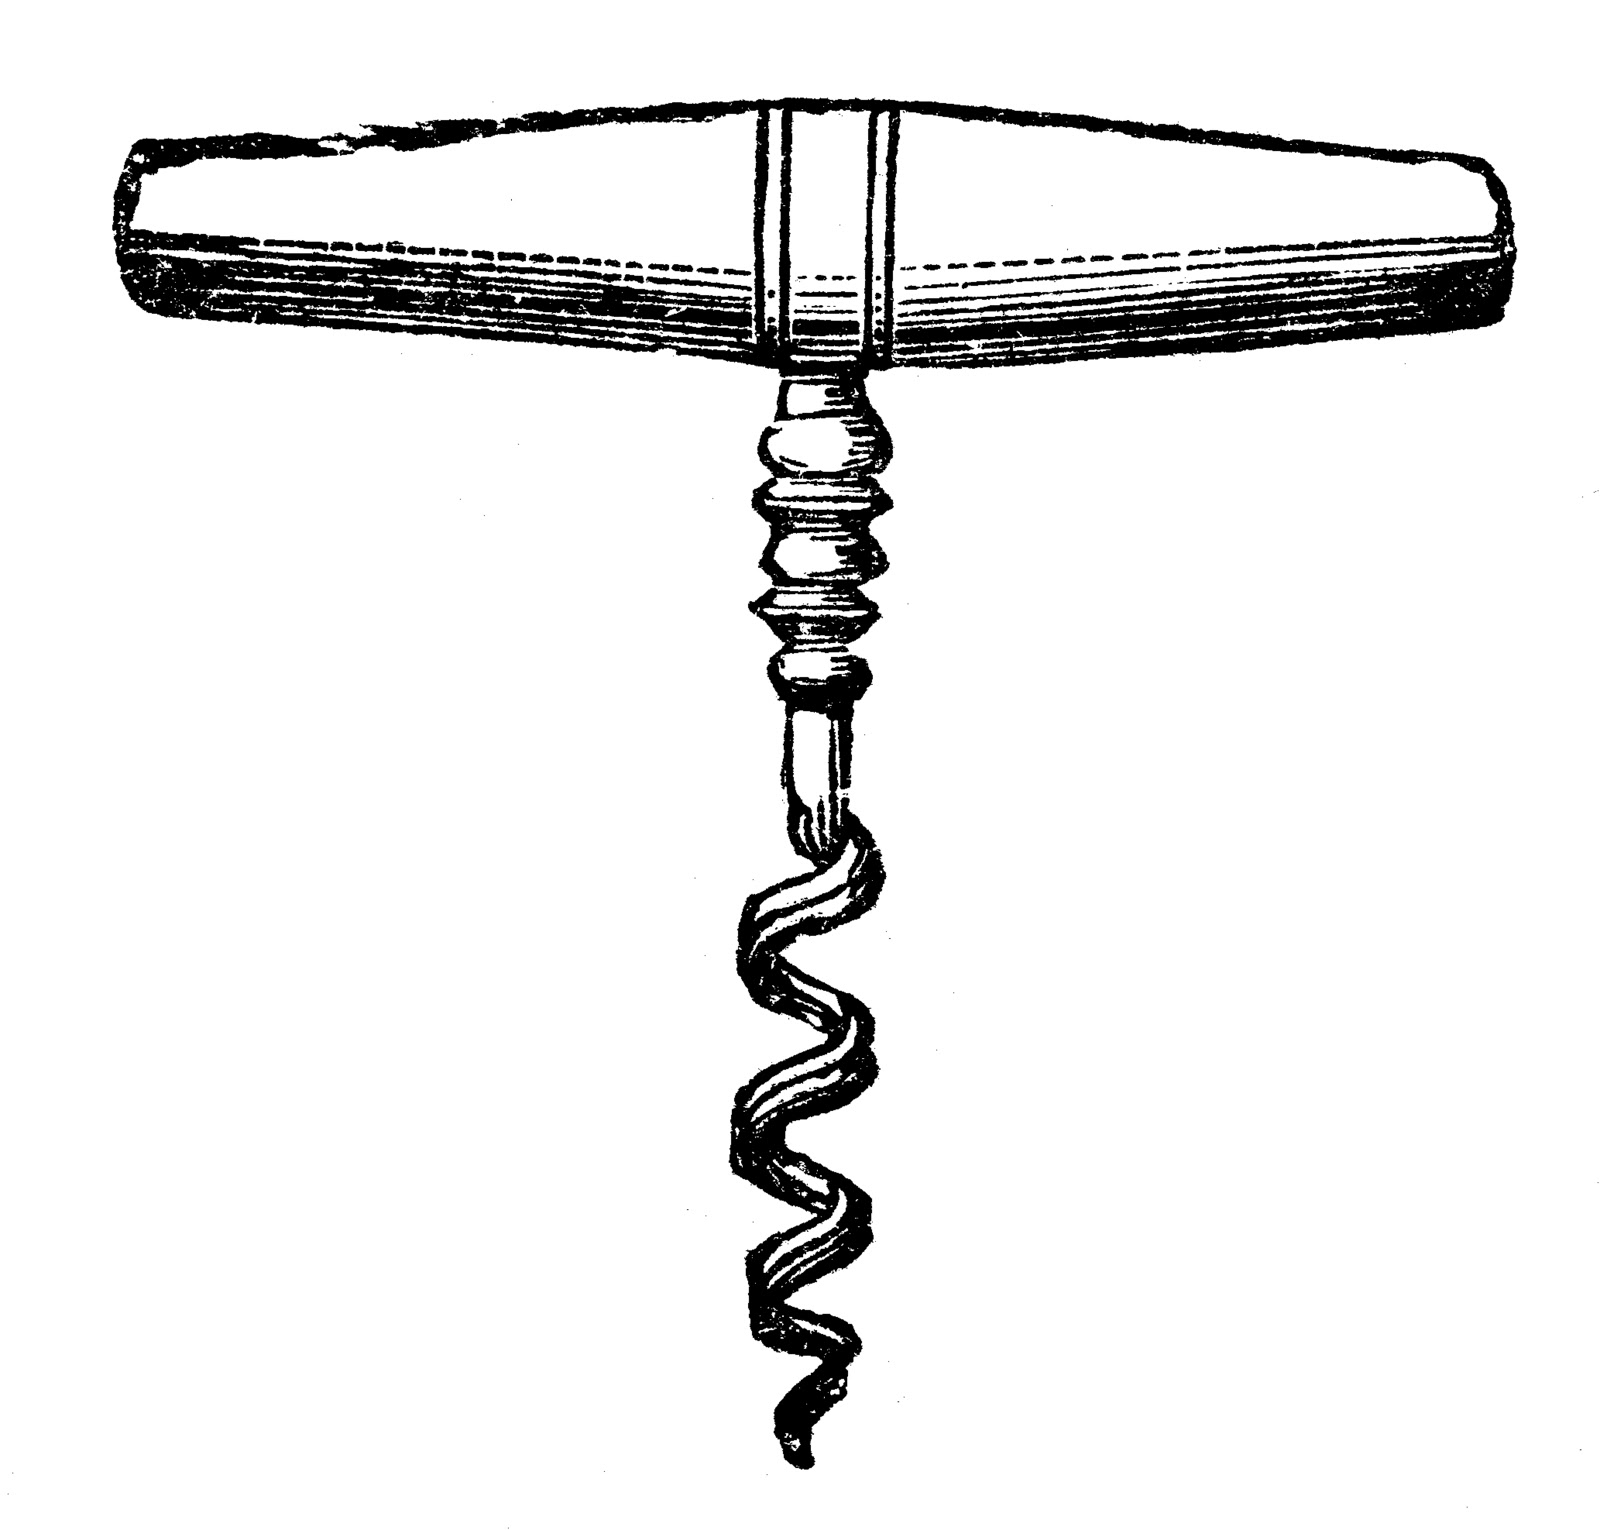 Free vintage clip art images: Vintage corkscrew wine openers